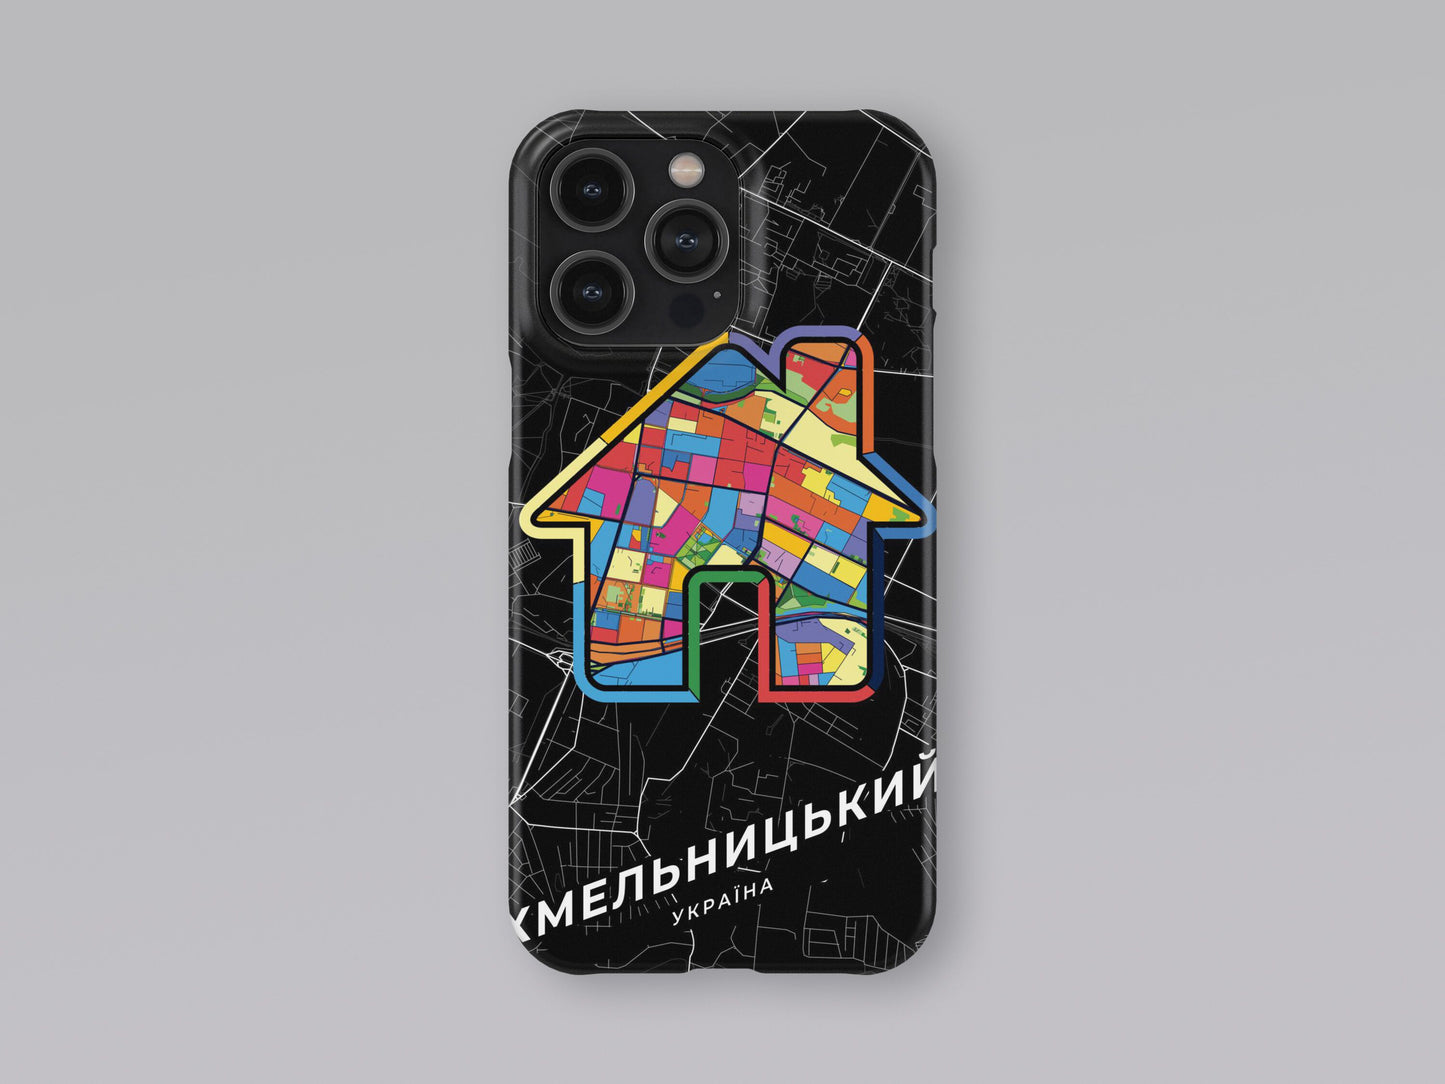 Khmelnytskyi Ukraine slim phone case with colorful icon. Birthday, wedding or housewarming gift. Couple match cases. 3